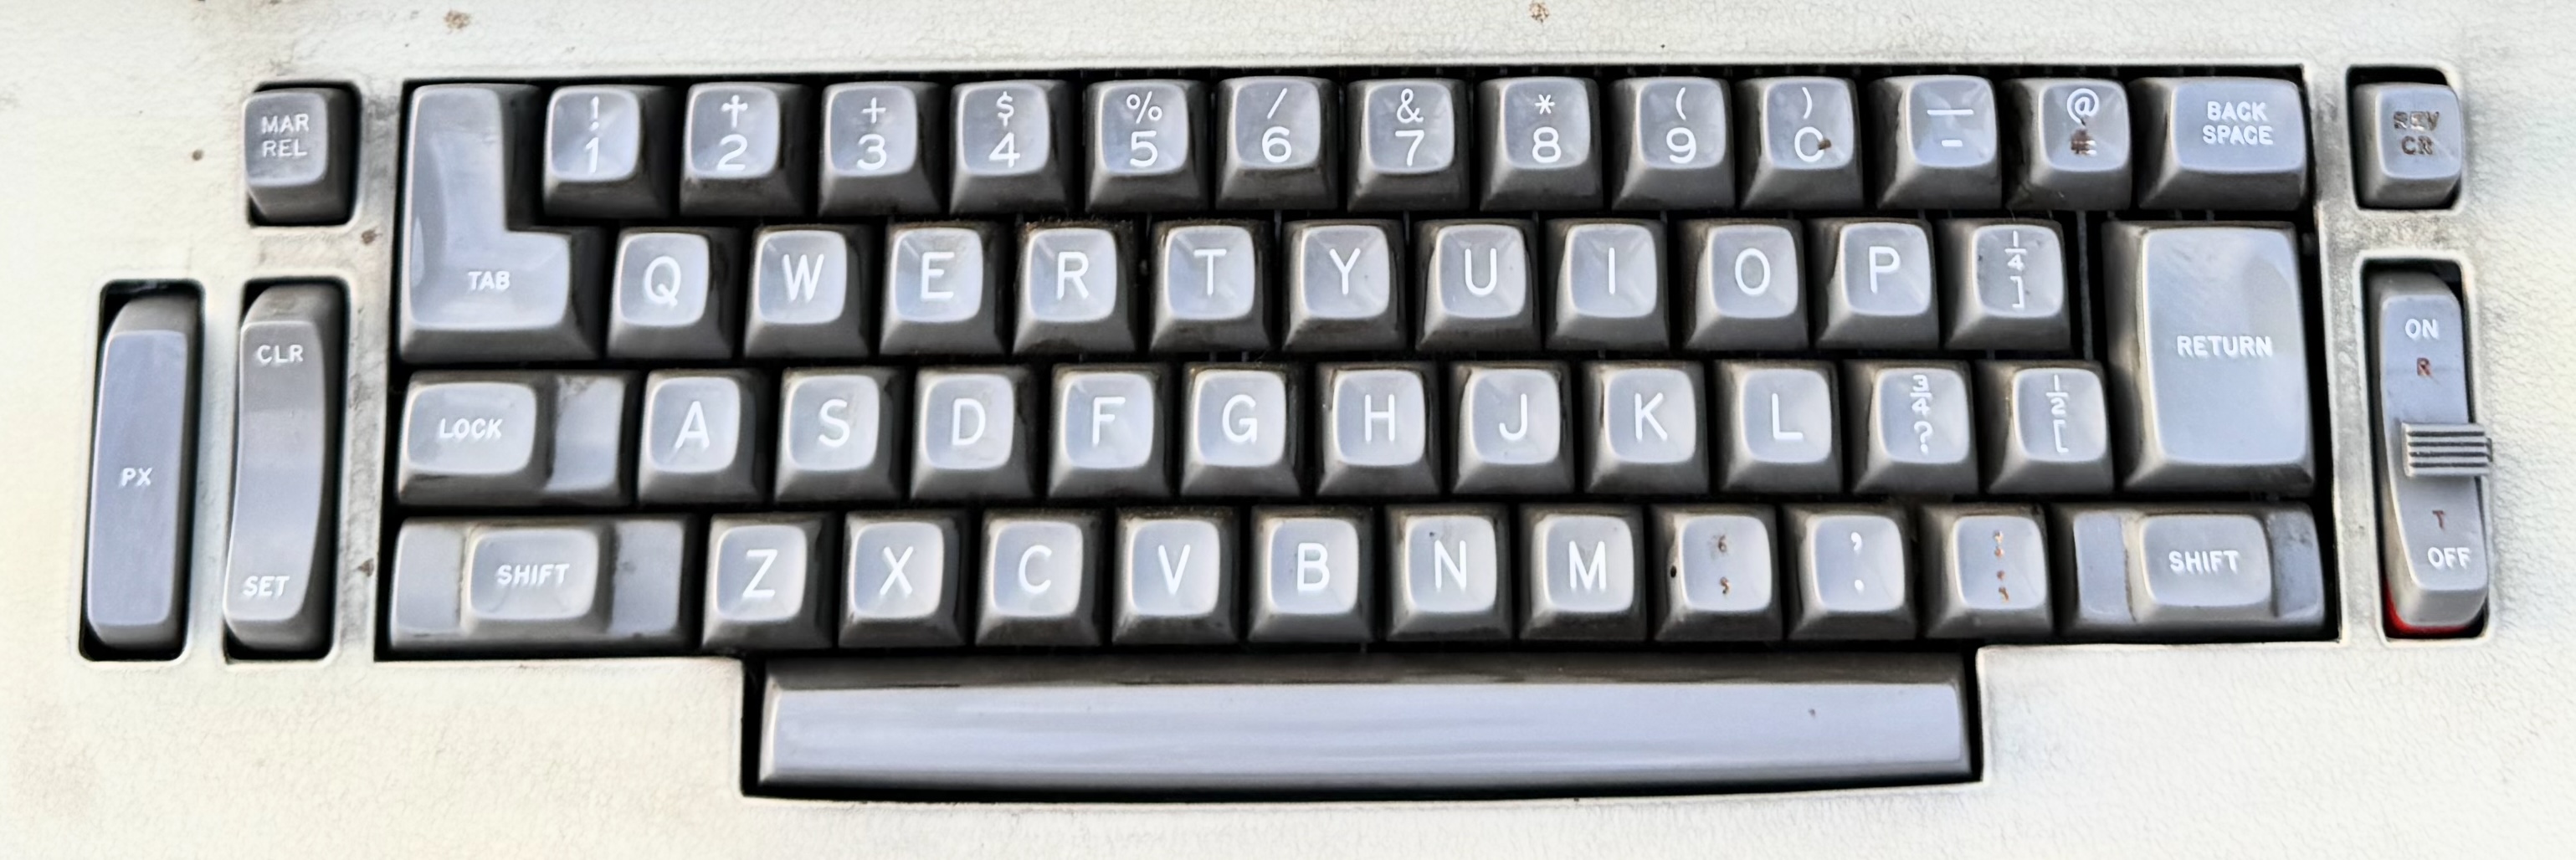 The MT/SR keyboard